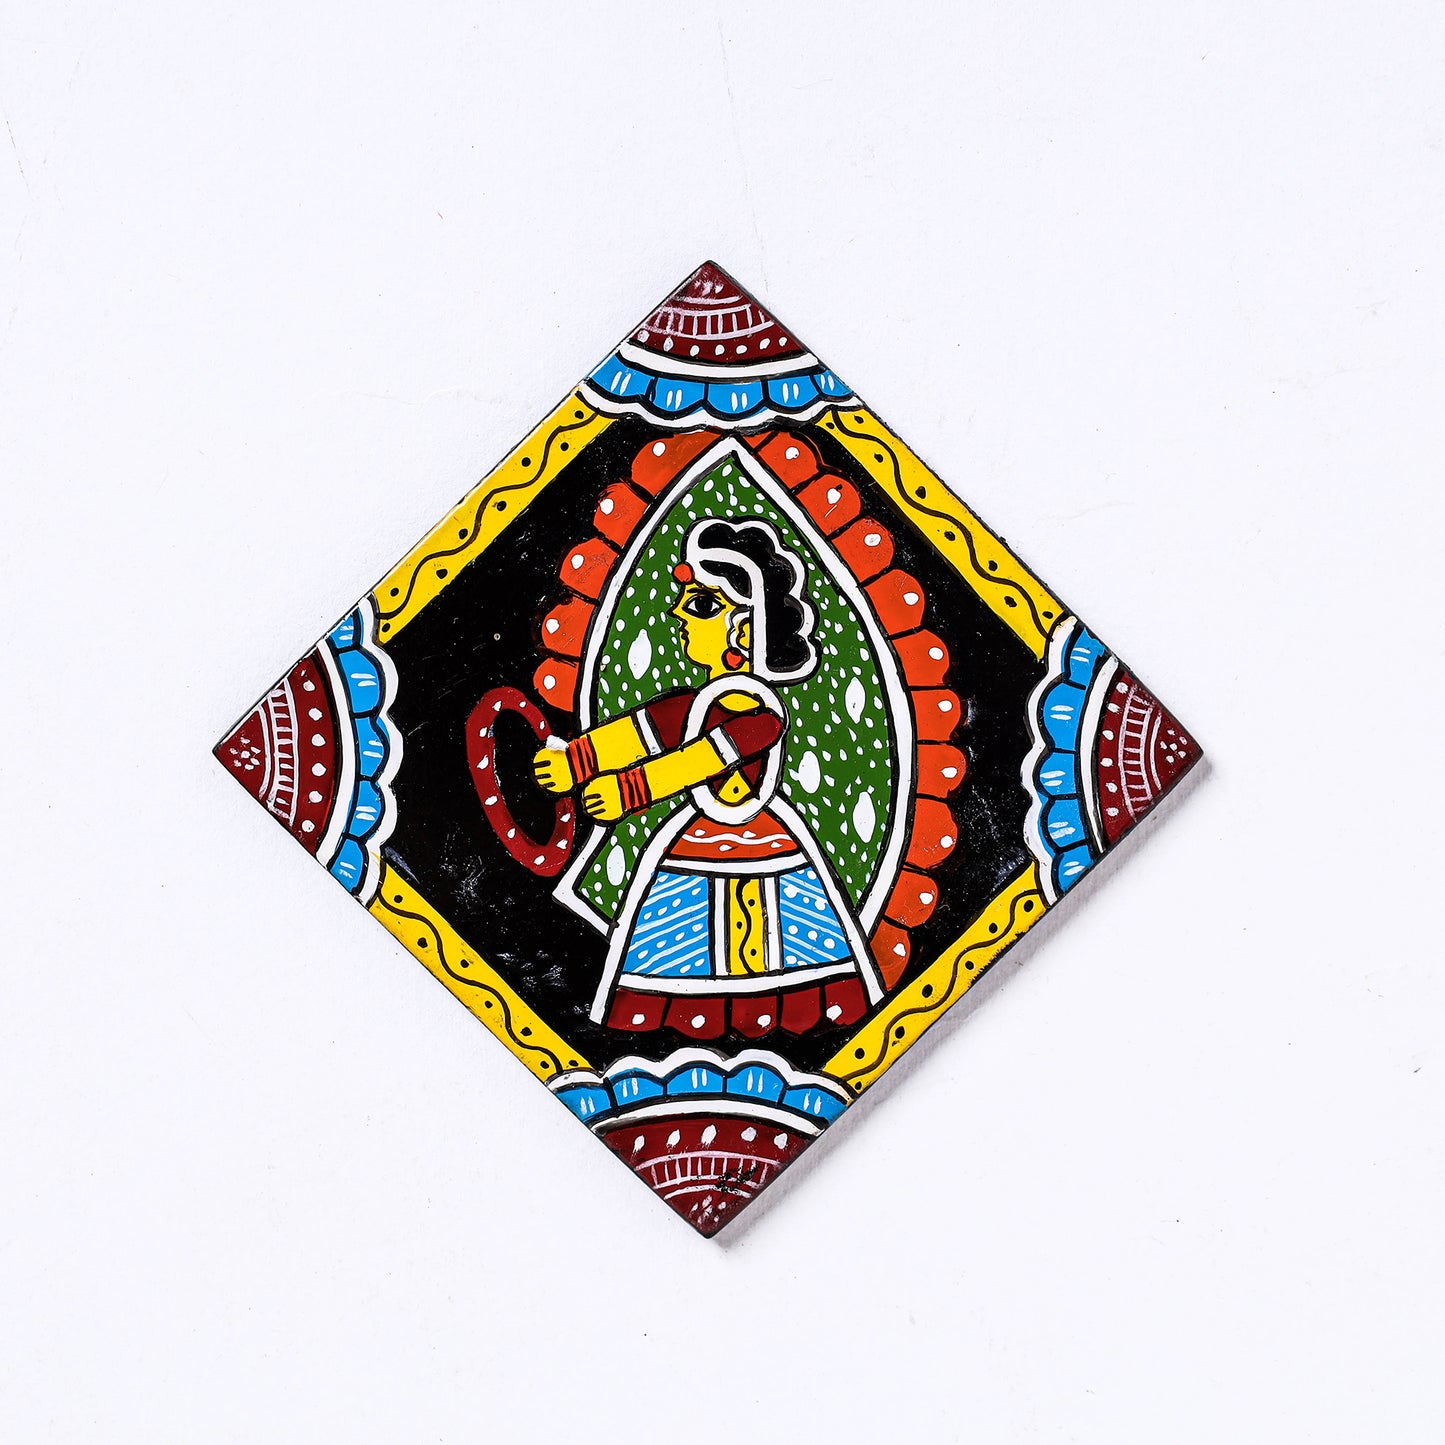 Tikuli Art Handpainted Wooden Coasters (Set of 4)